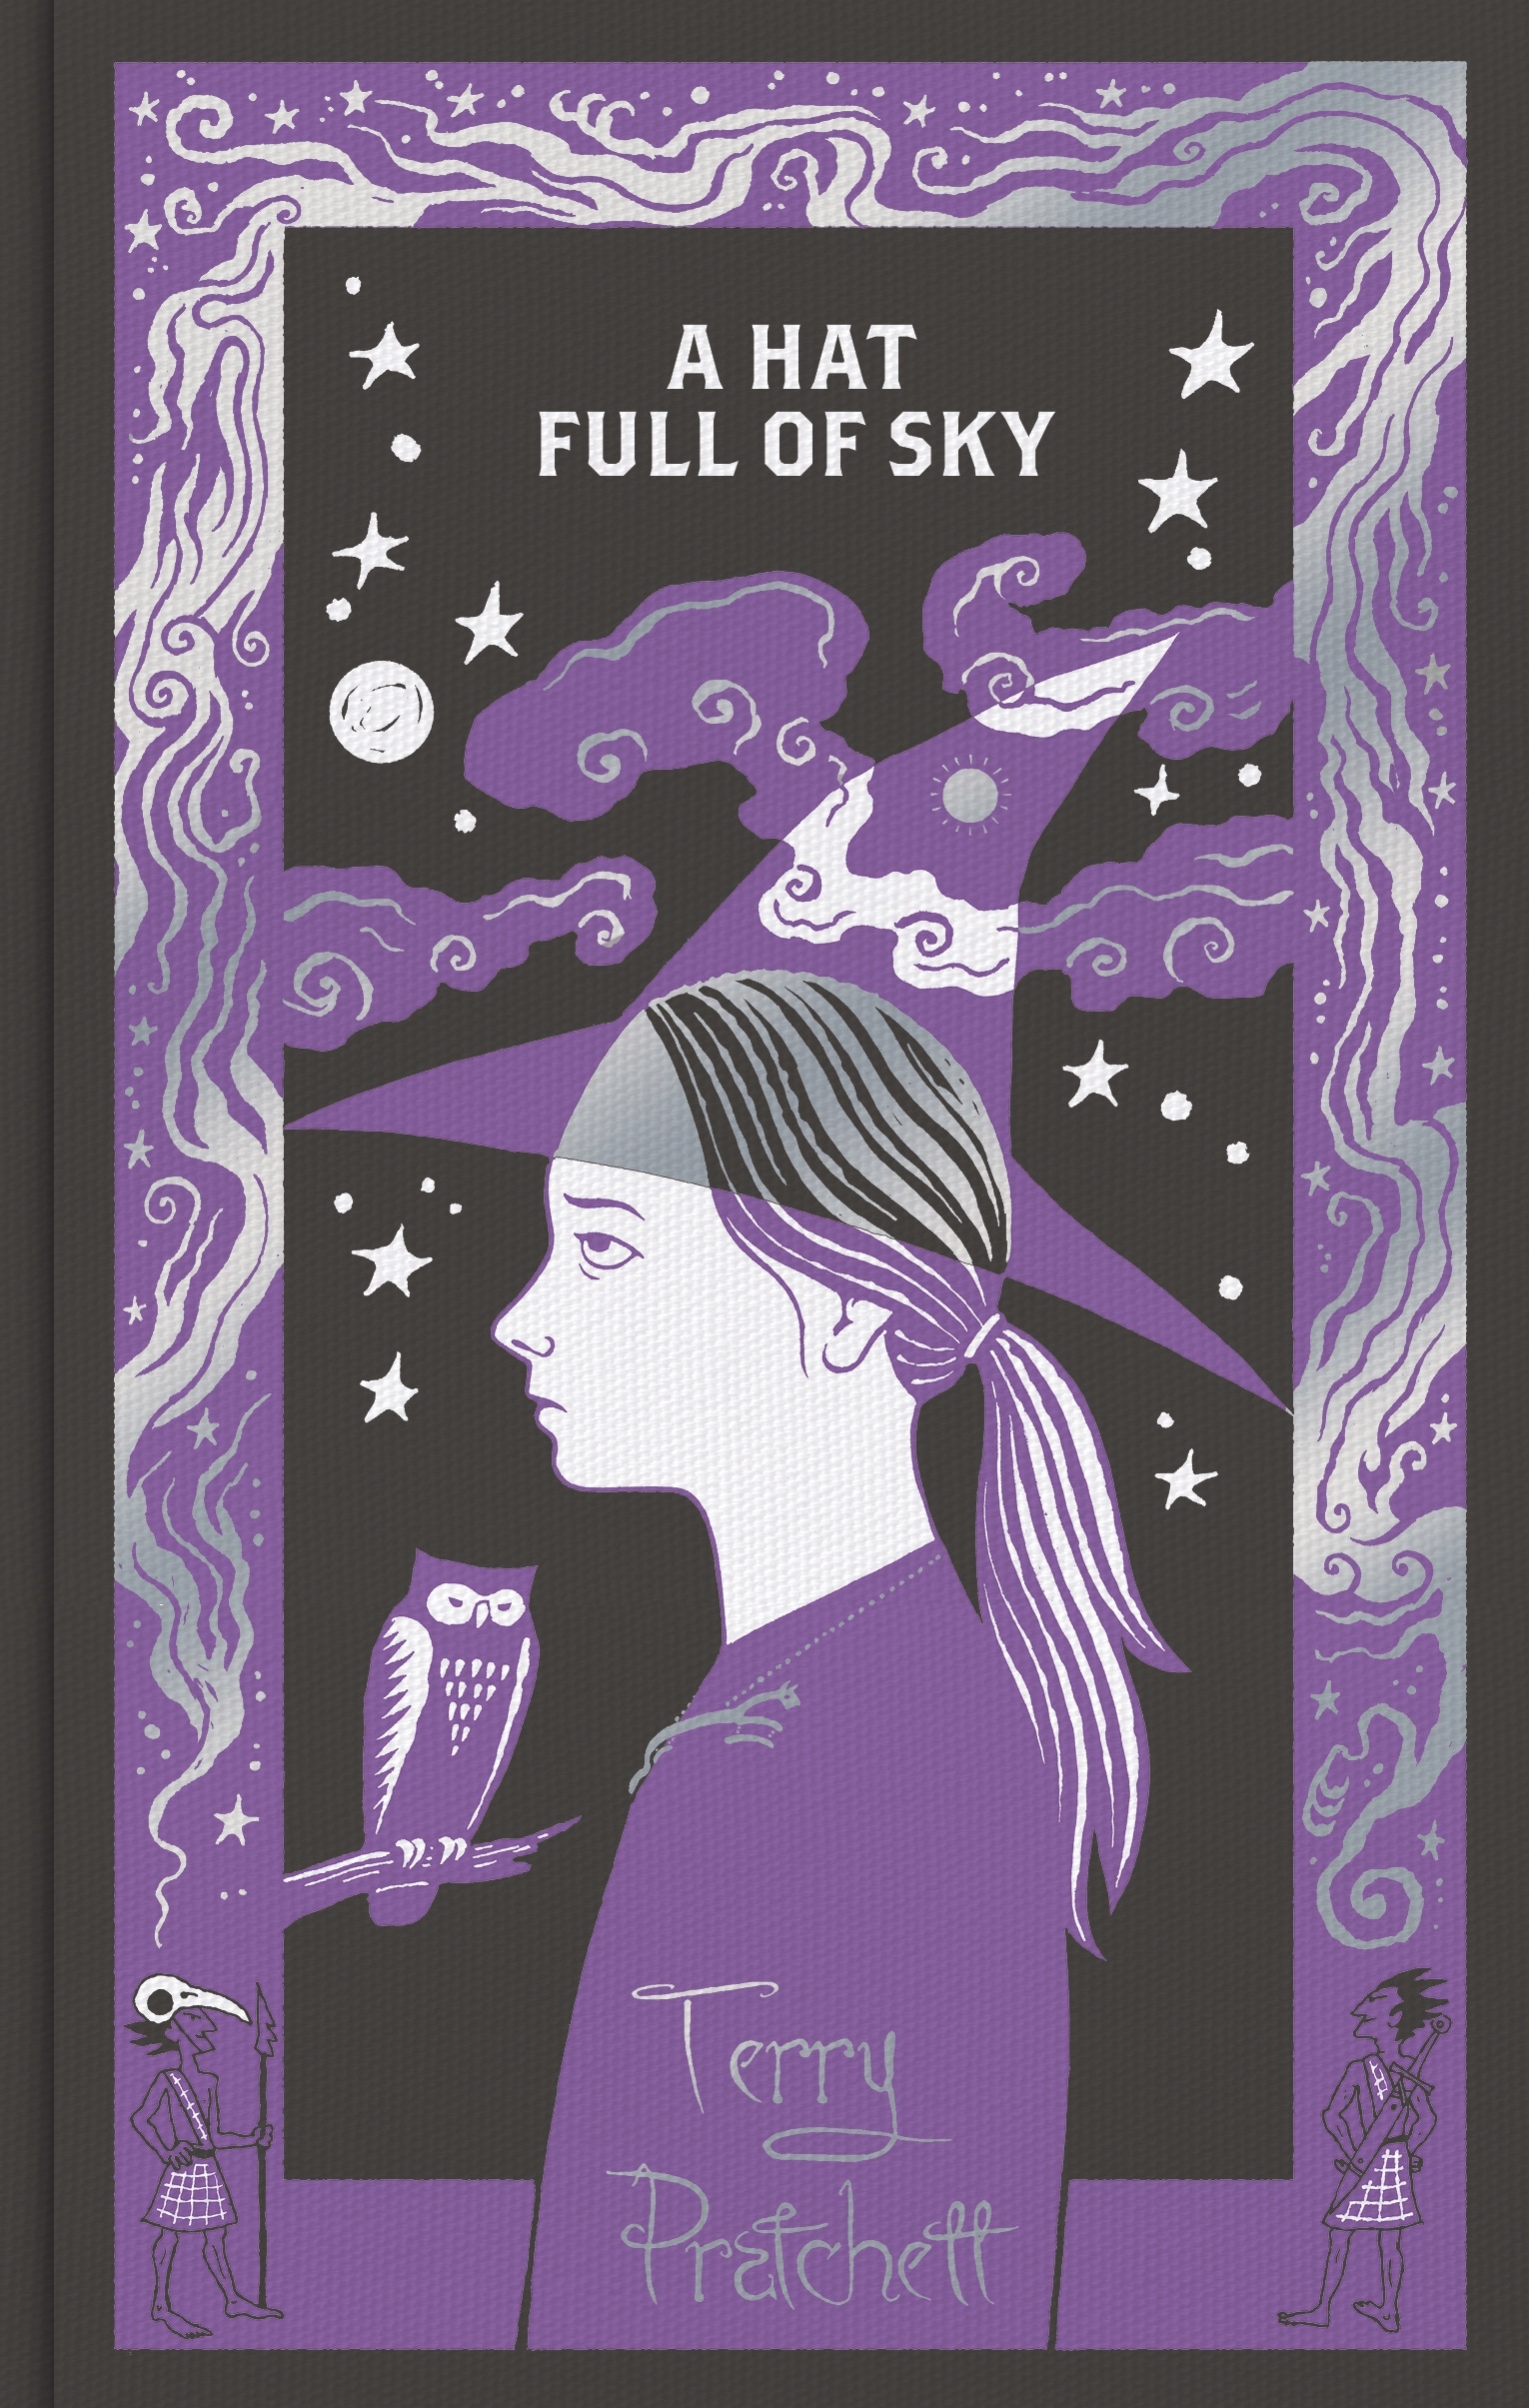 Book “A Hat Full of Sky” by Terry Pratchett — June 10, 2021